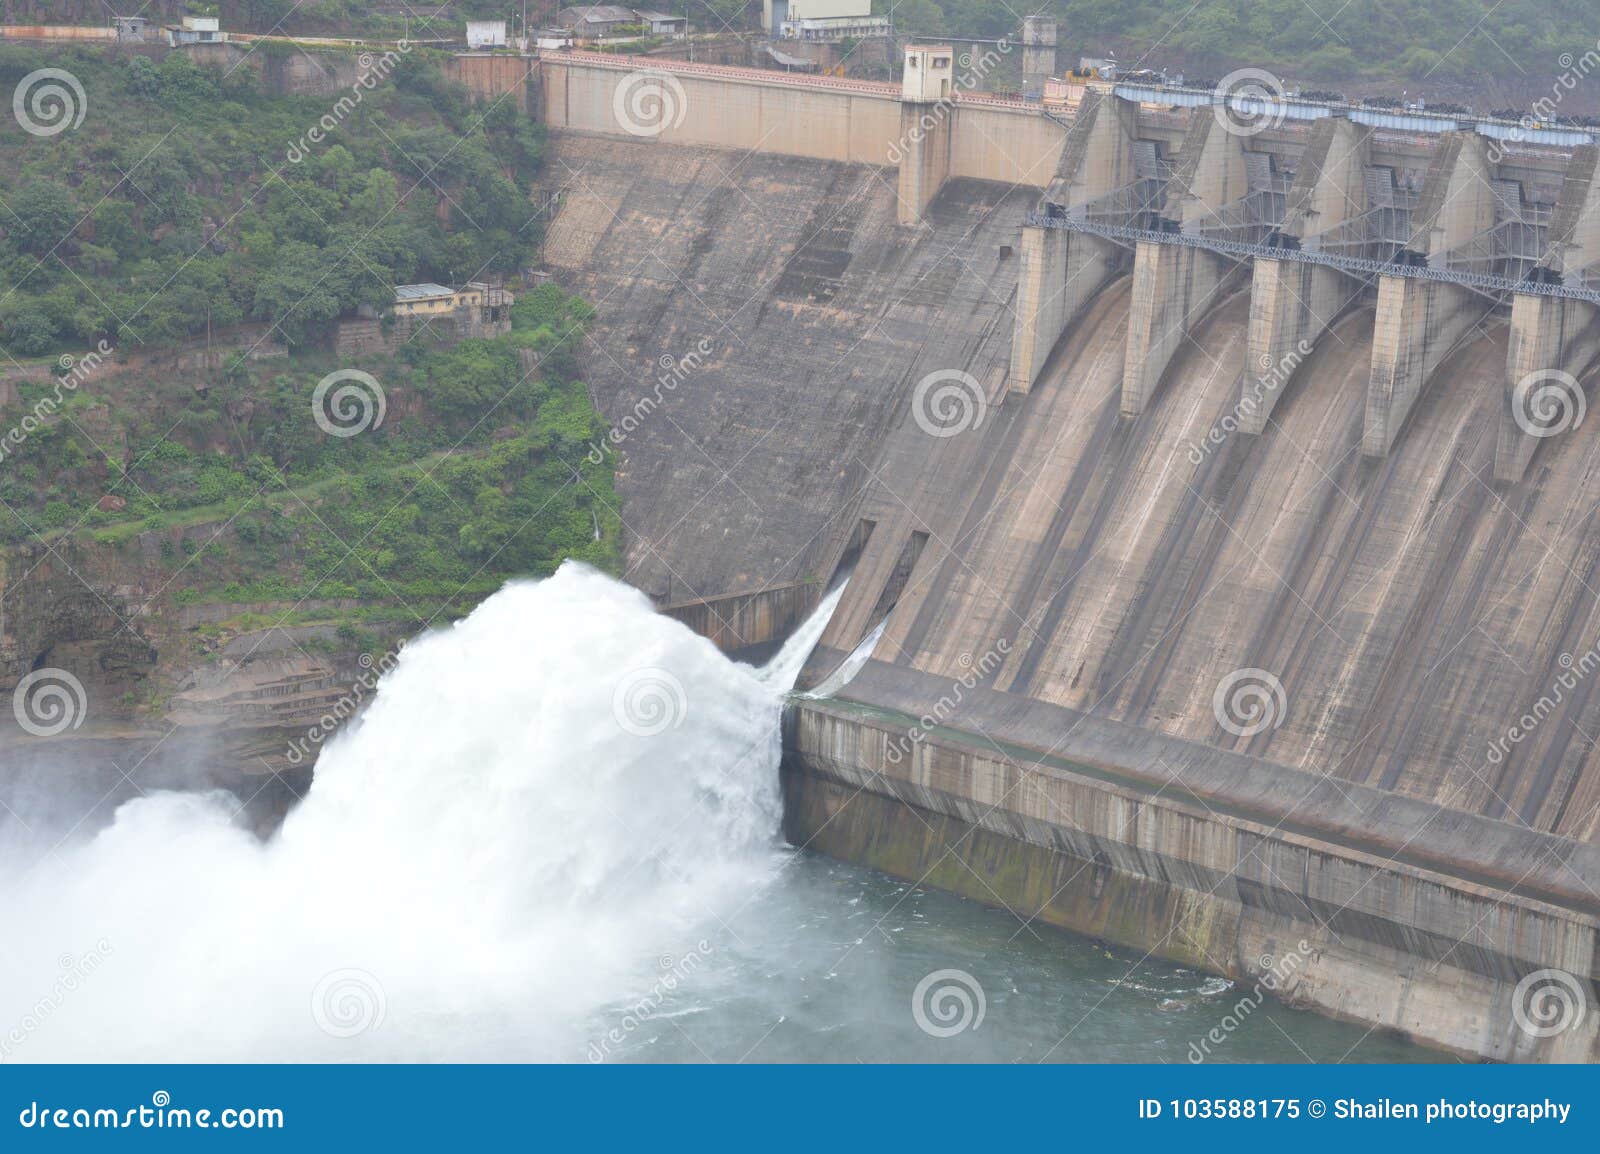 srisailam dam, andhra pradesh, india